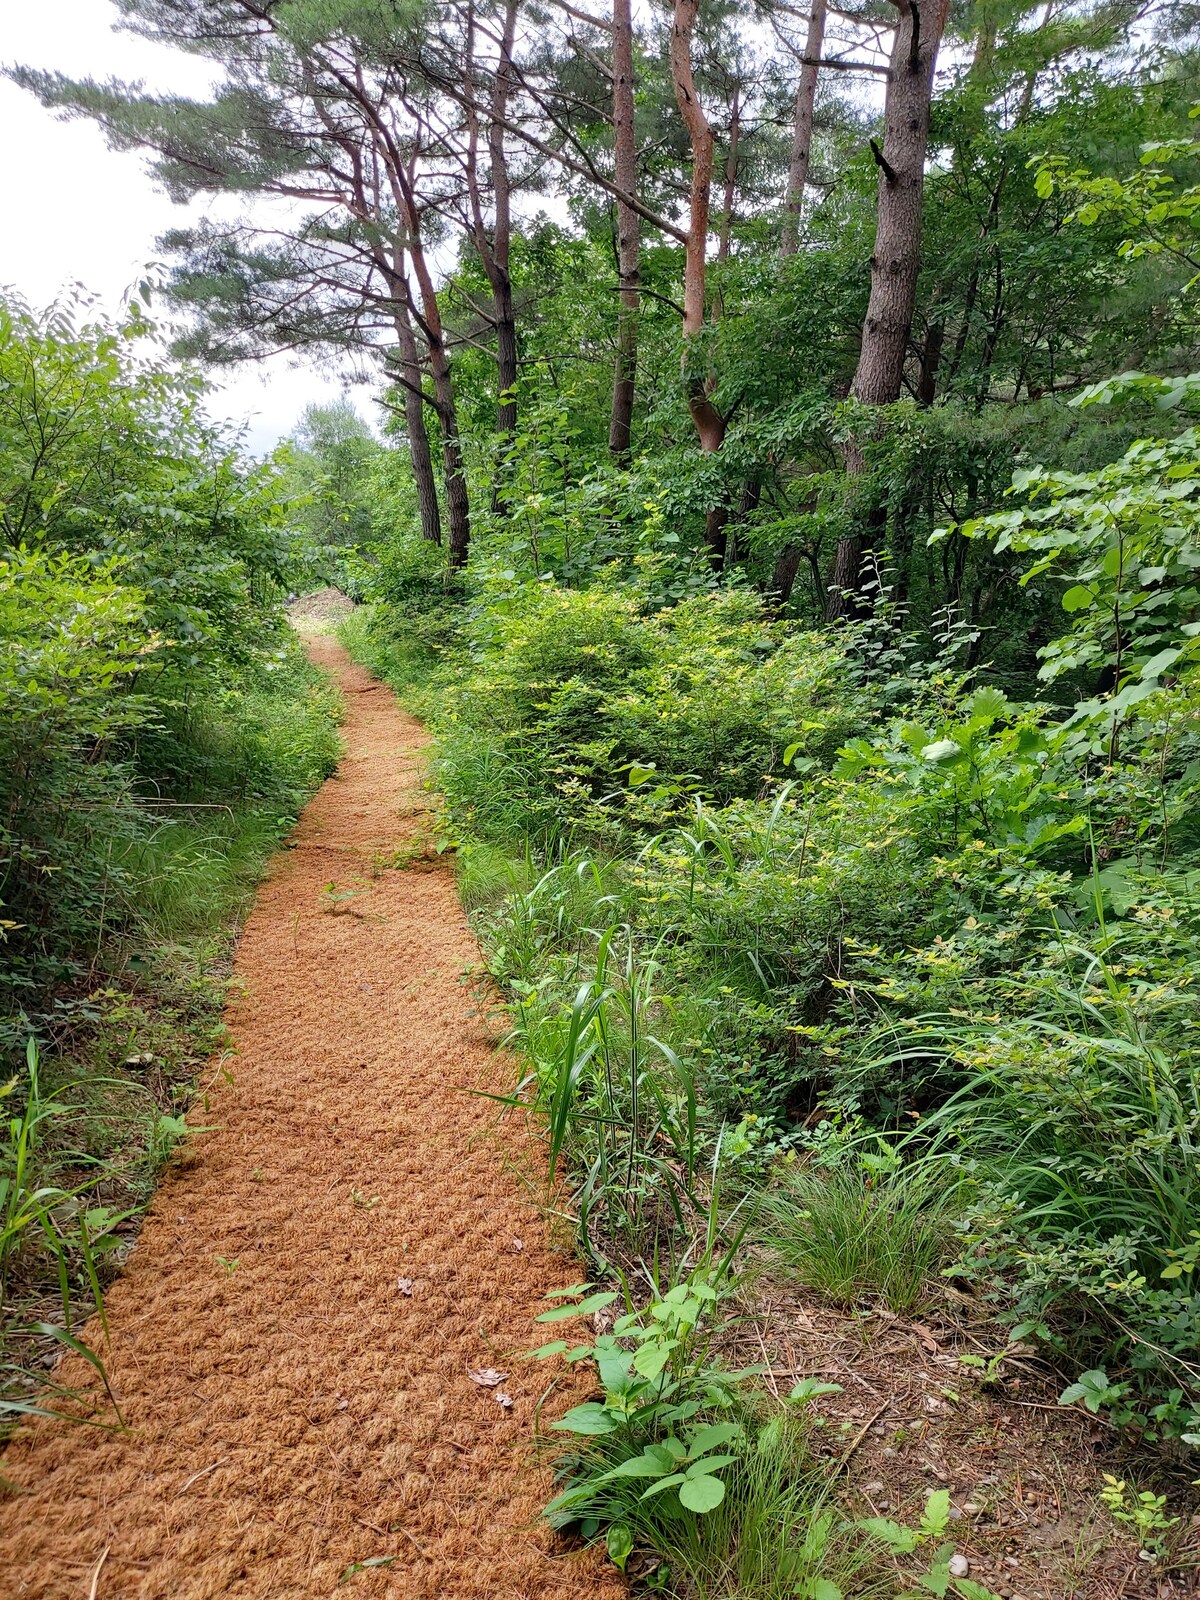 Tower Goal Swallow Jeongseon-dar一片宁静的松树
距离旅游指数30分钟路程的香味